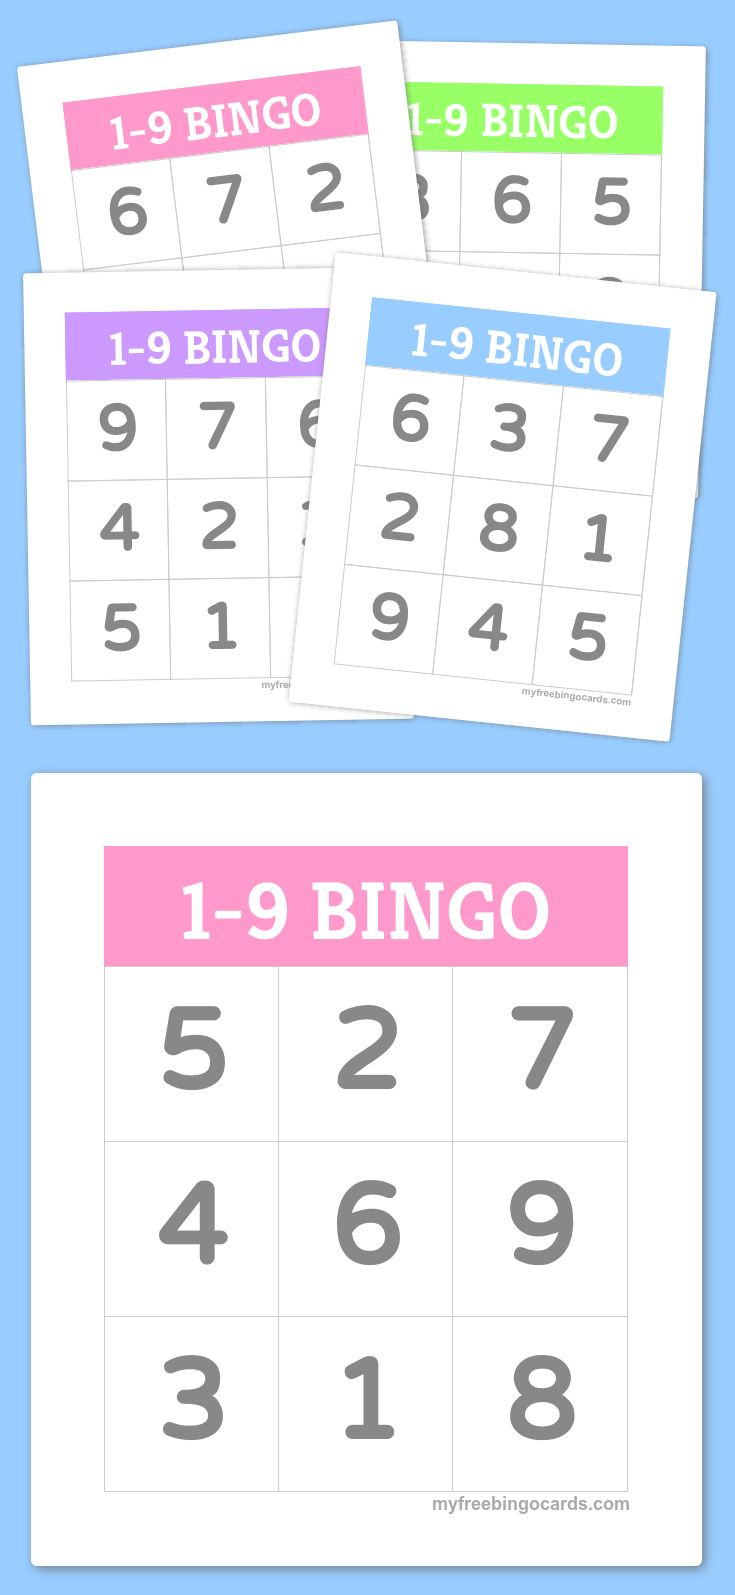 1 9 BINGO Bingo Cards Printable Bingo For Kids Free 